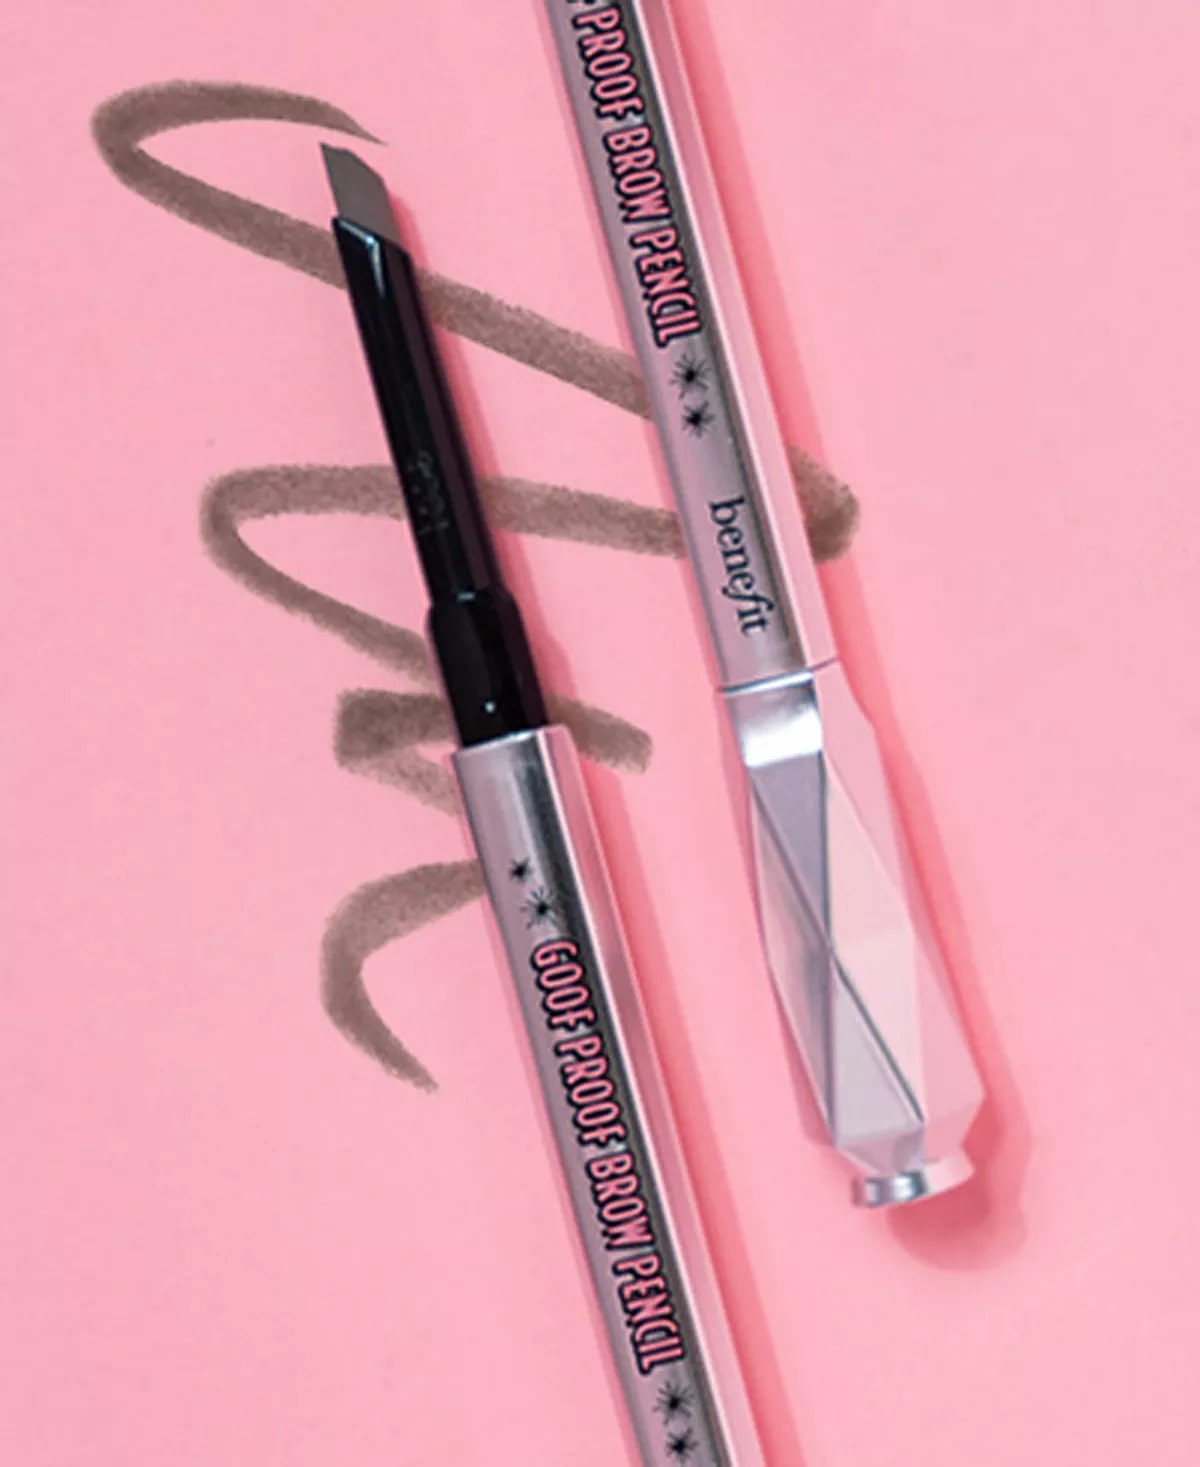 Goof Proof Waterproof Easy Shape & Fill Eyebrow Pencil by Benefit